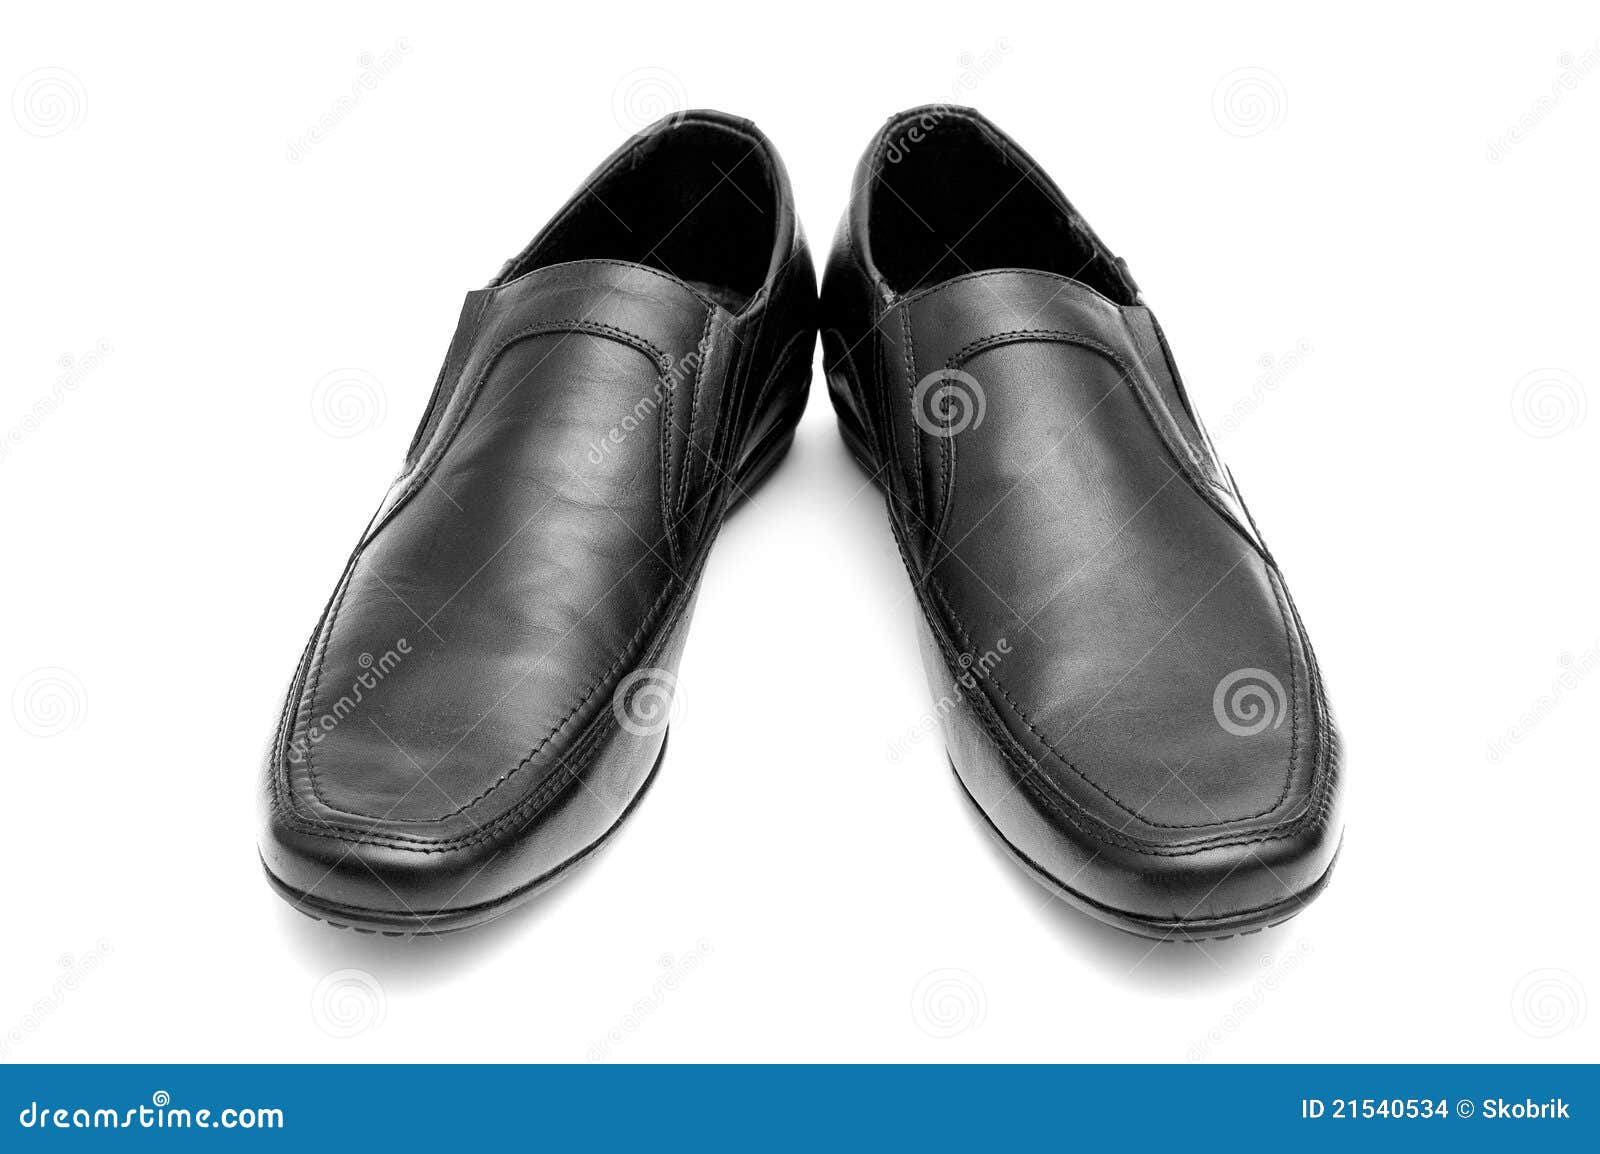 Pair of black man's shoes stock photo. Image of elegant - 21540534